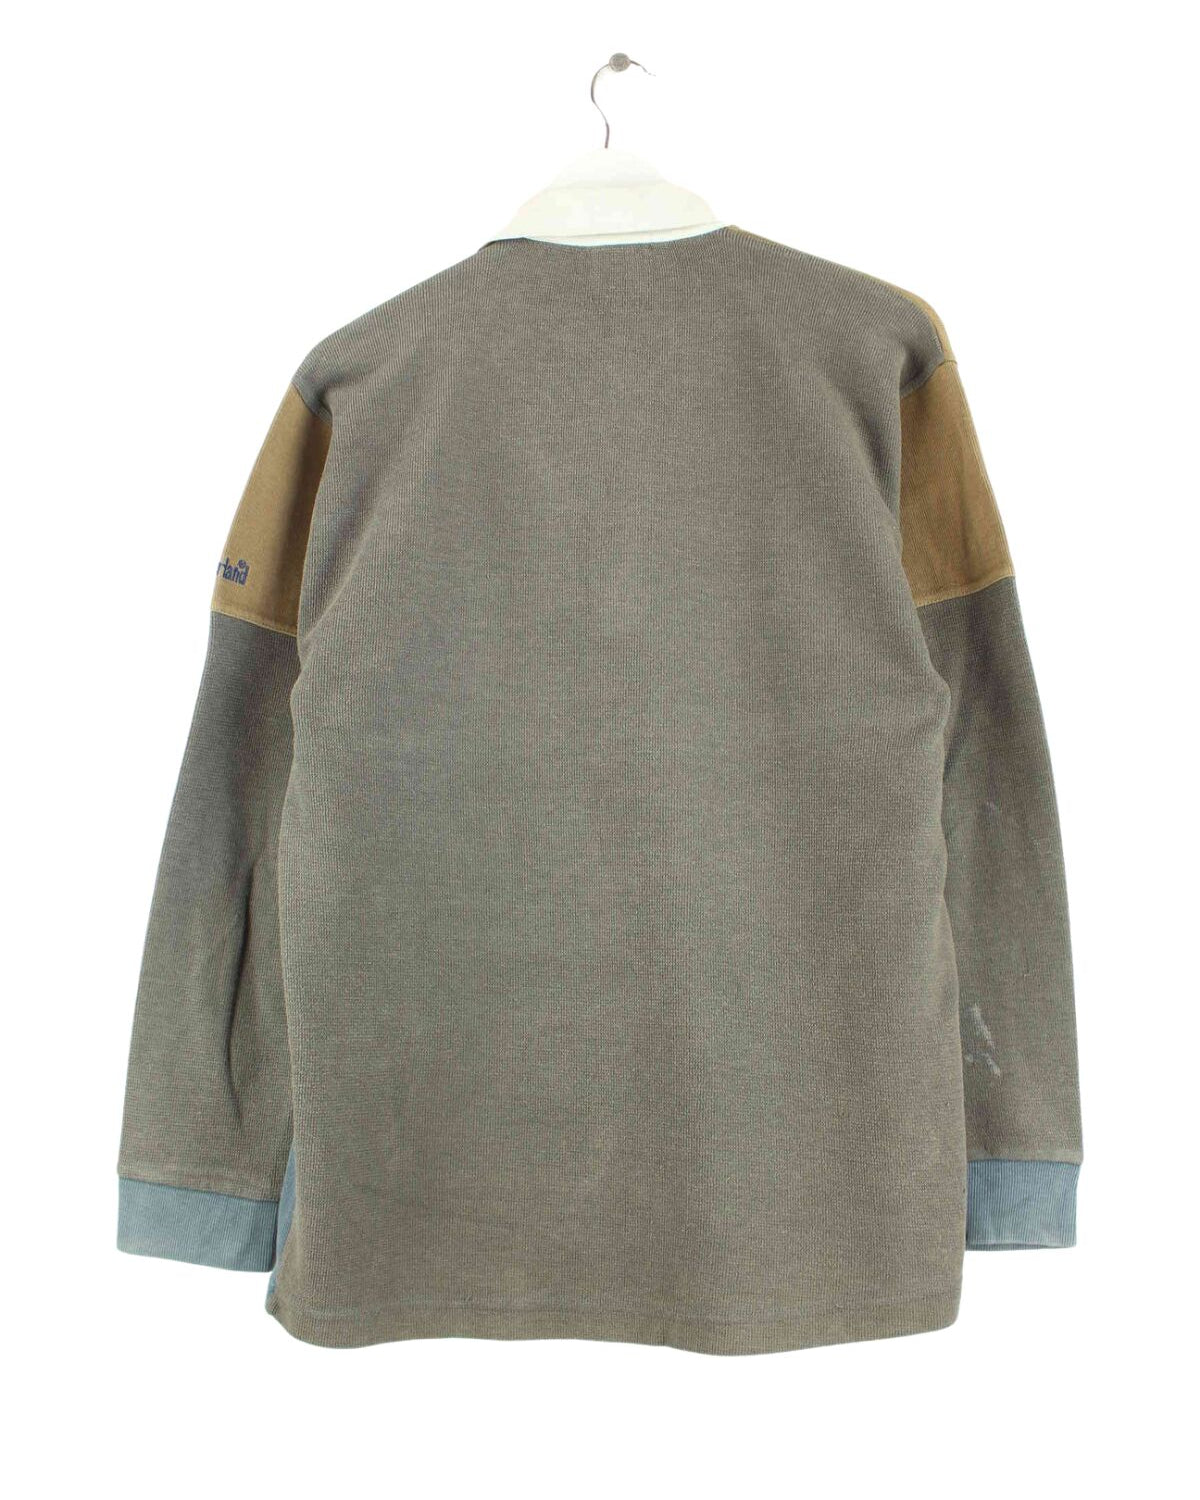 Timberland 90s Vintage Polo Sweater Braun L (back image)